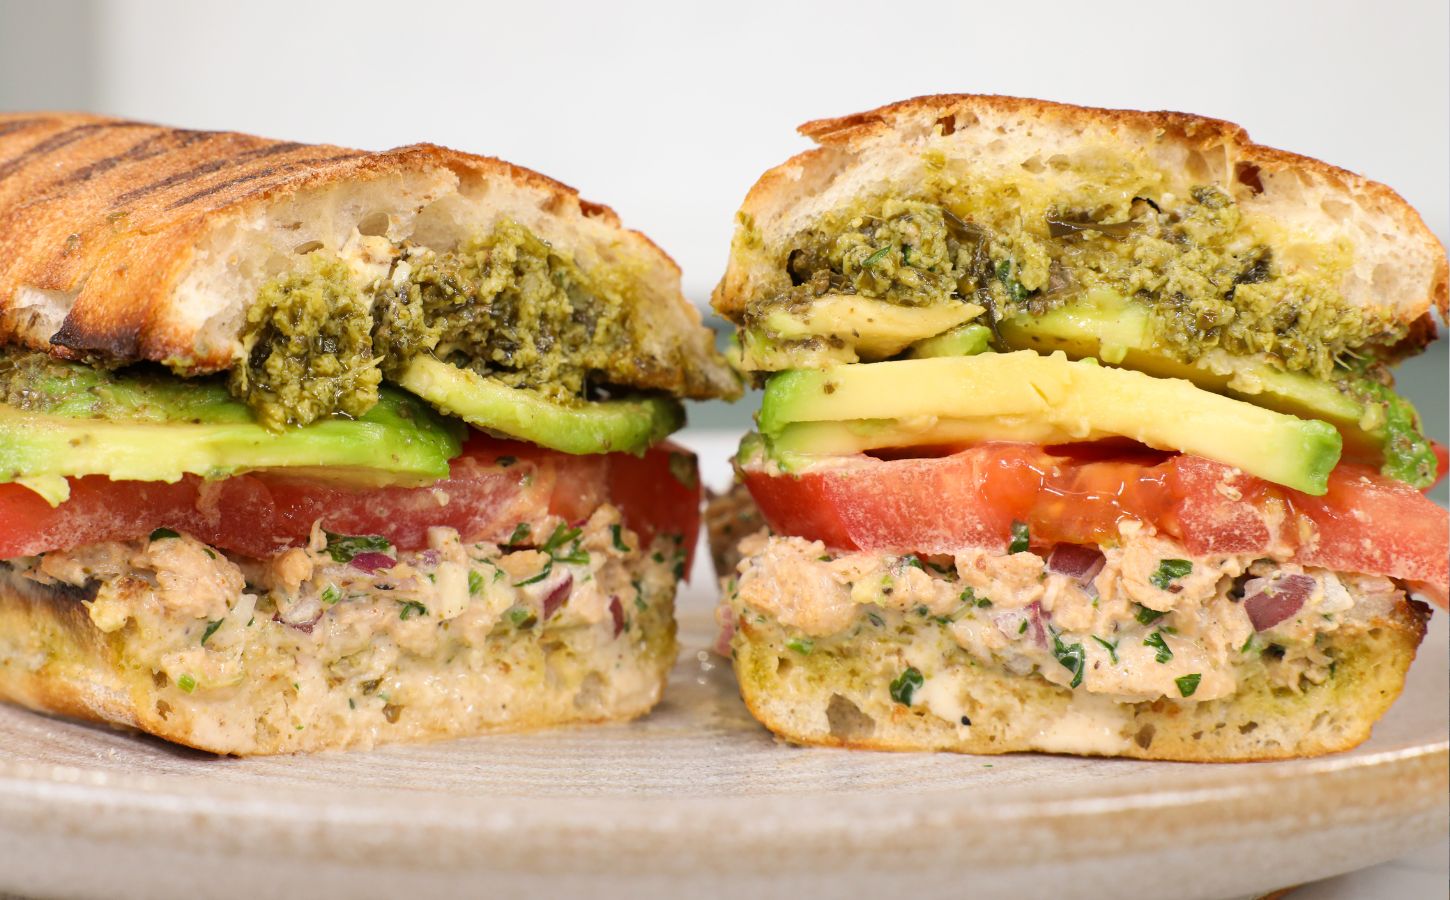 A vegan version of the Joe and the Juice Tunacado sandwich